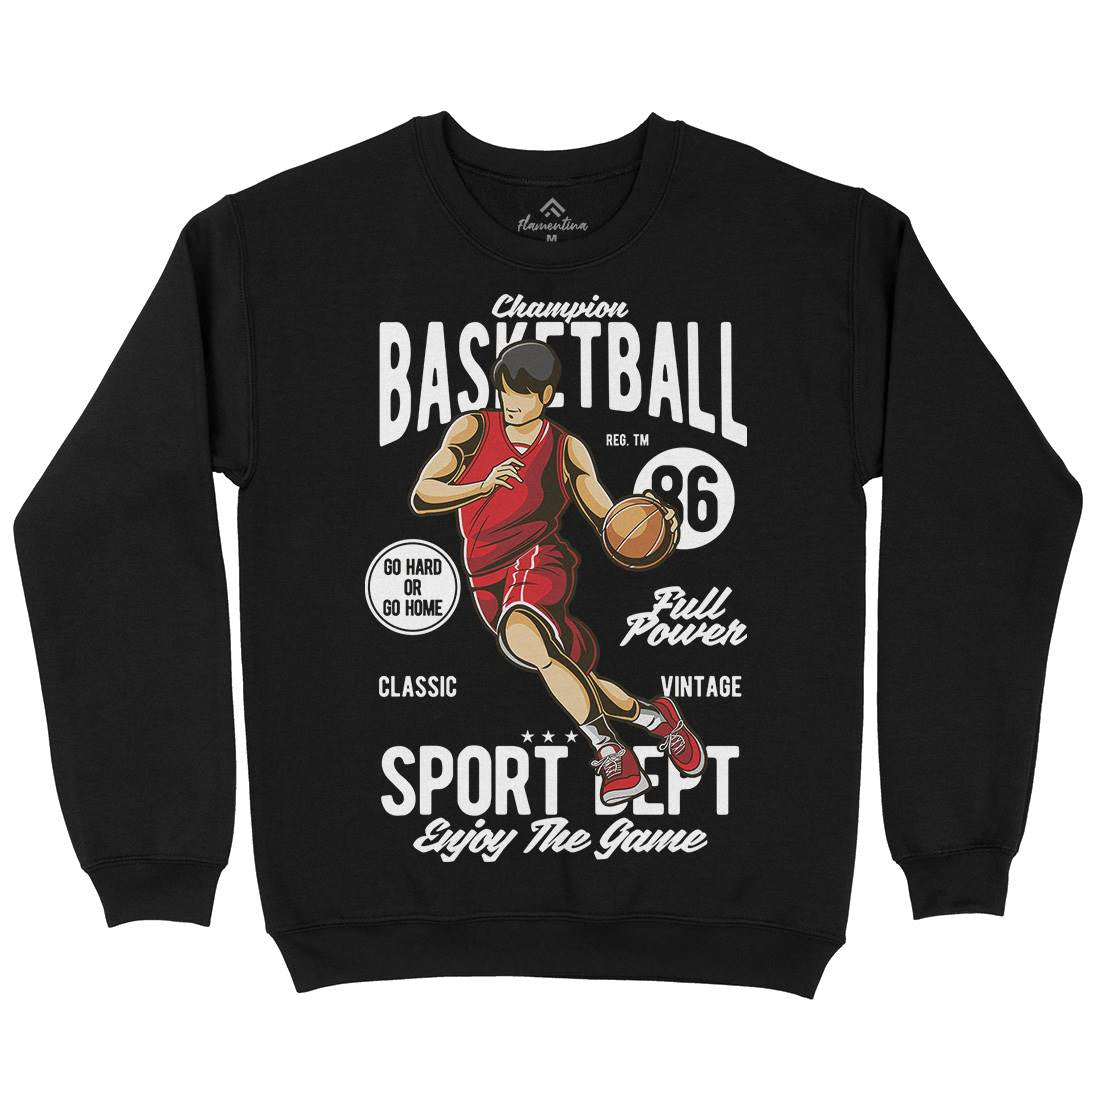 Champion Basketball Mens Crew Neck Sweatshirt Sport C327